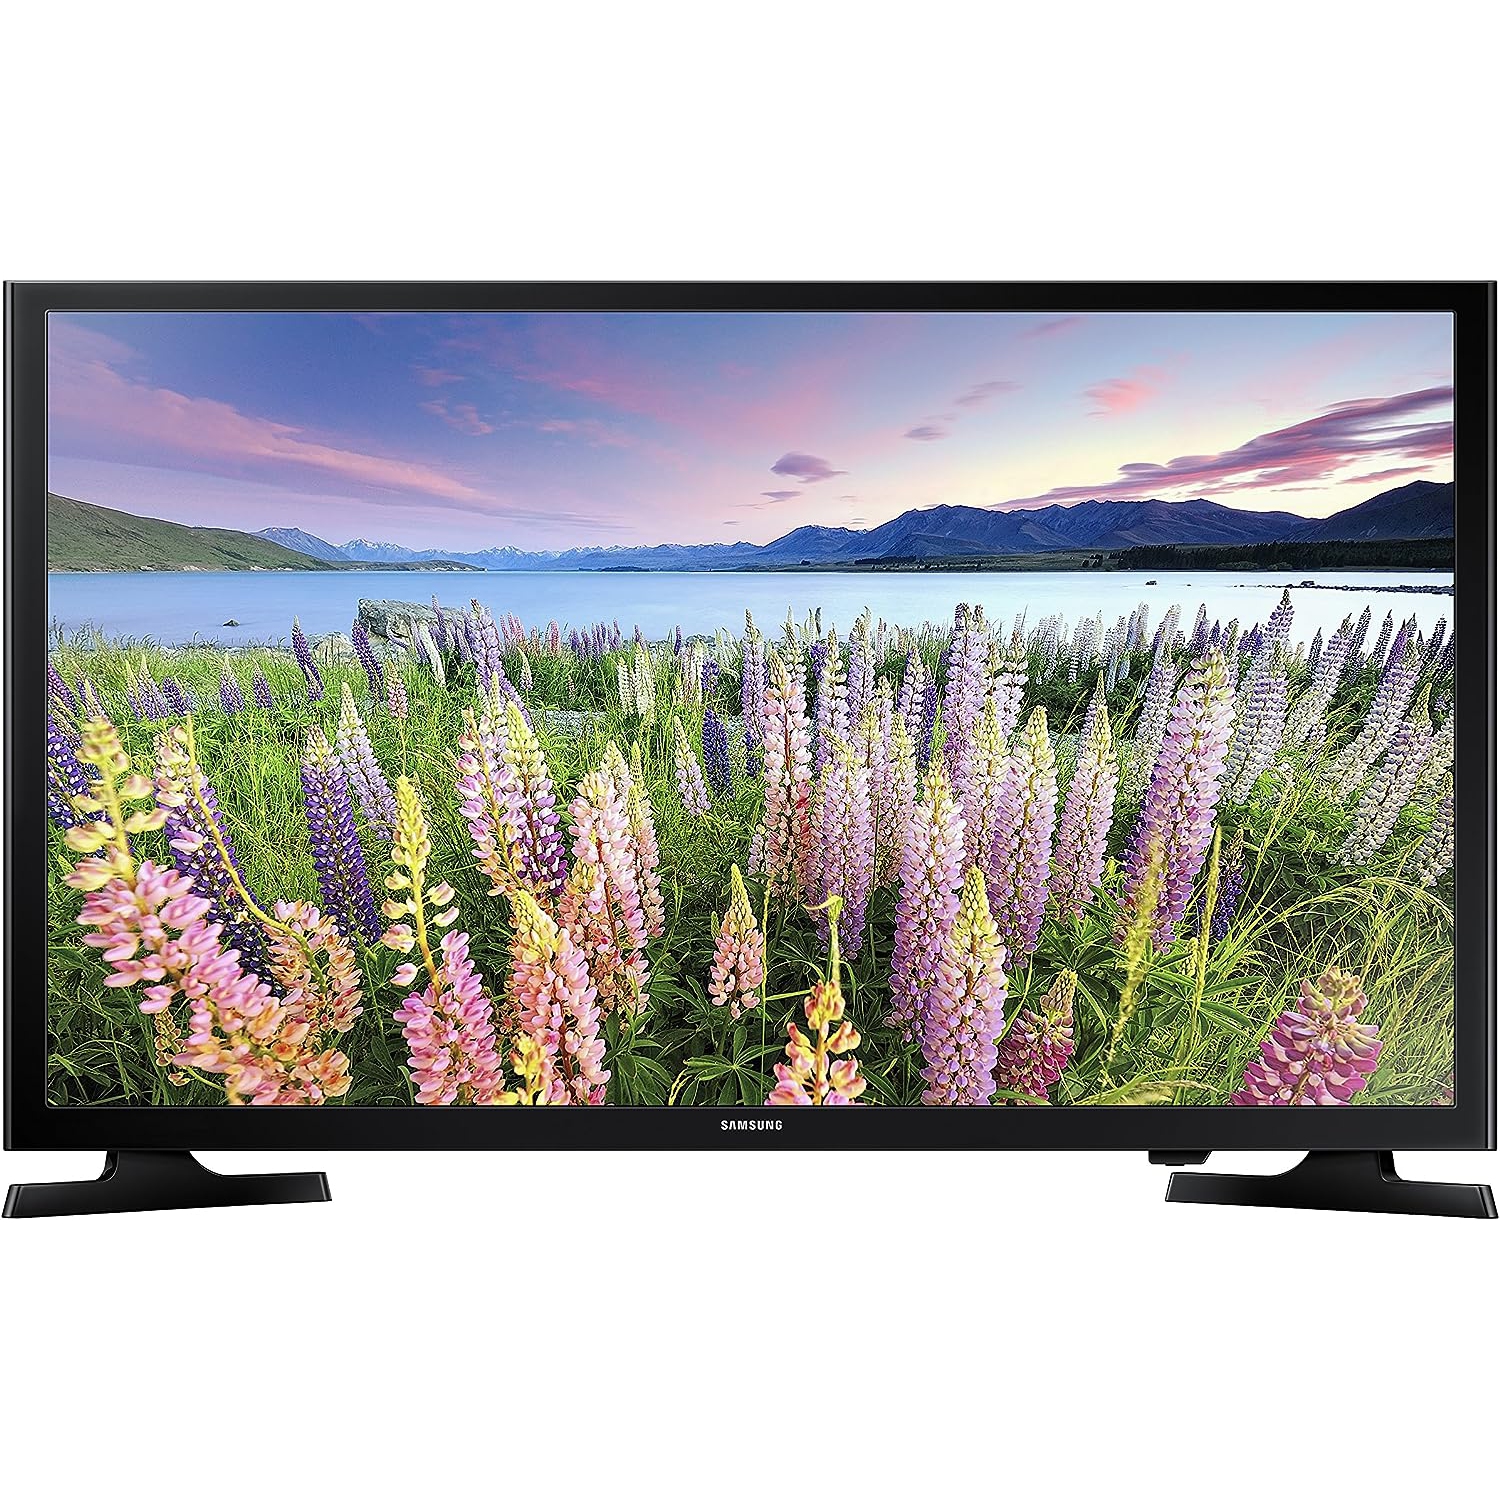 Refurbished (Good) - Samsung 40" 1080p HD LED Tizen Smart TV (UN40N5200AFXZC)